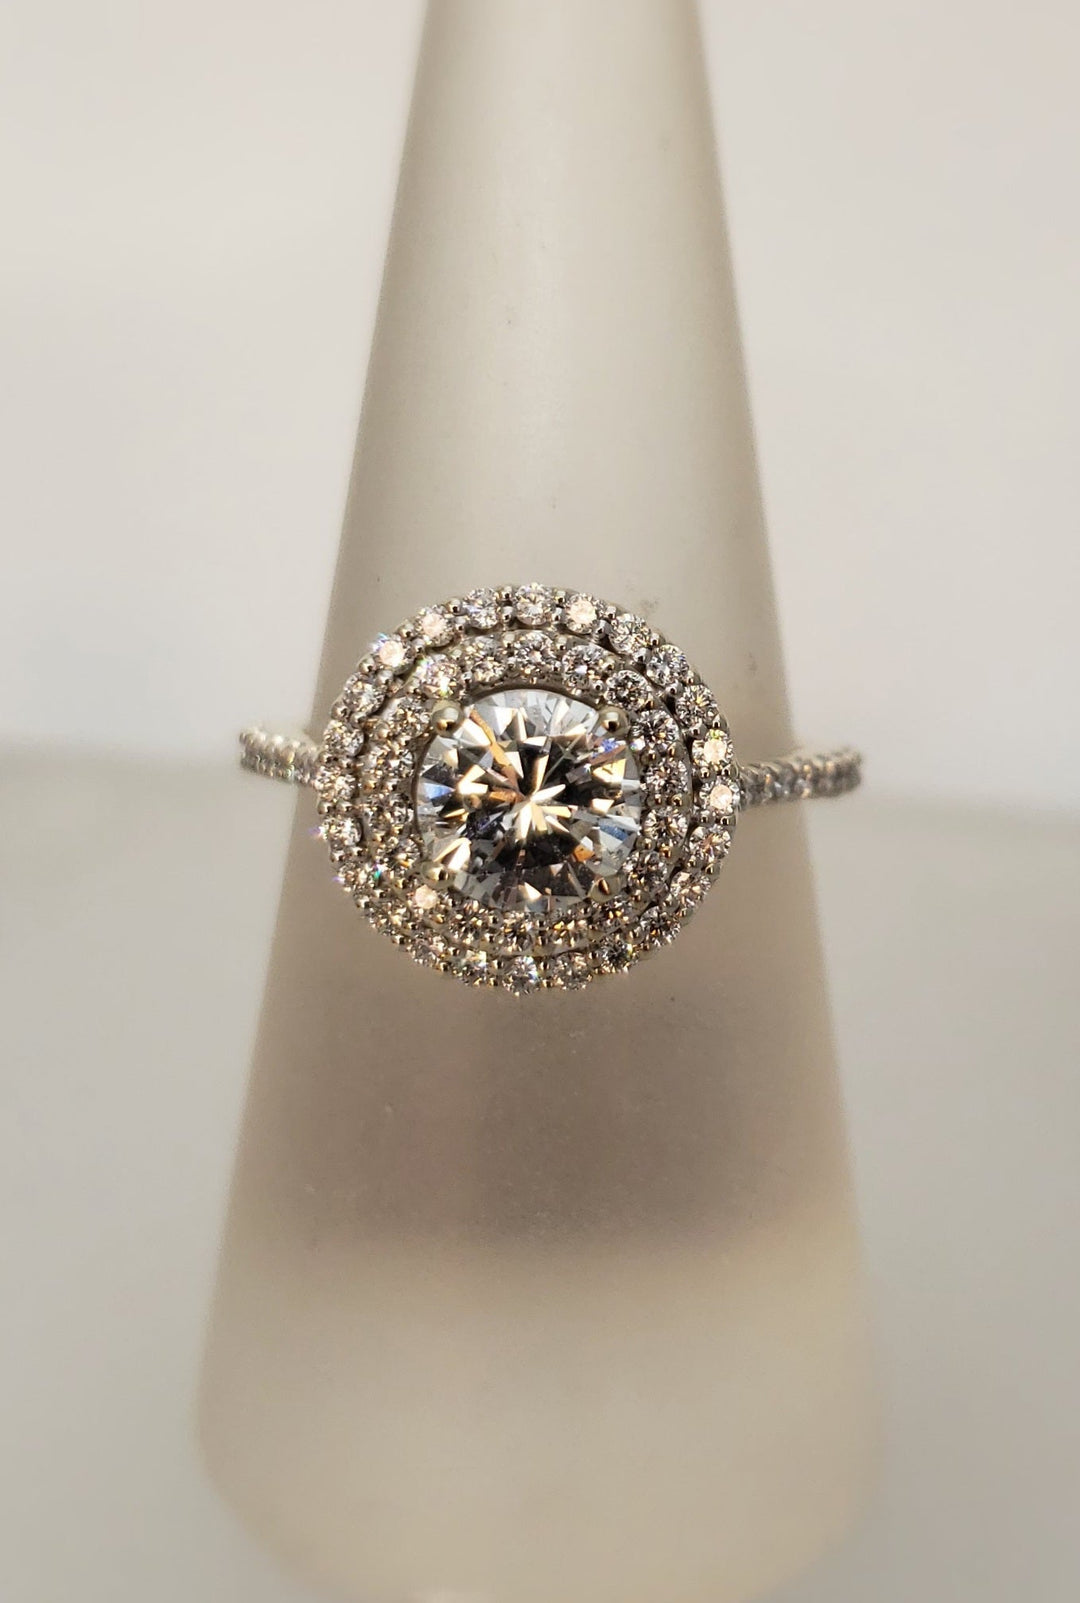 Double halo round brilliant diamond engagement ring